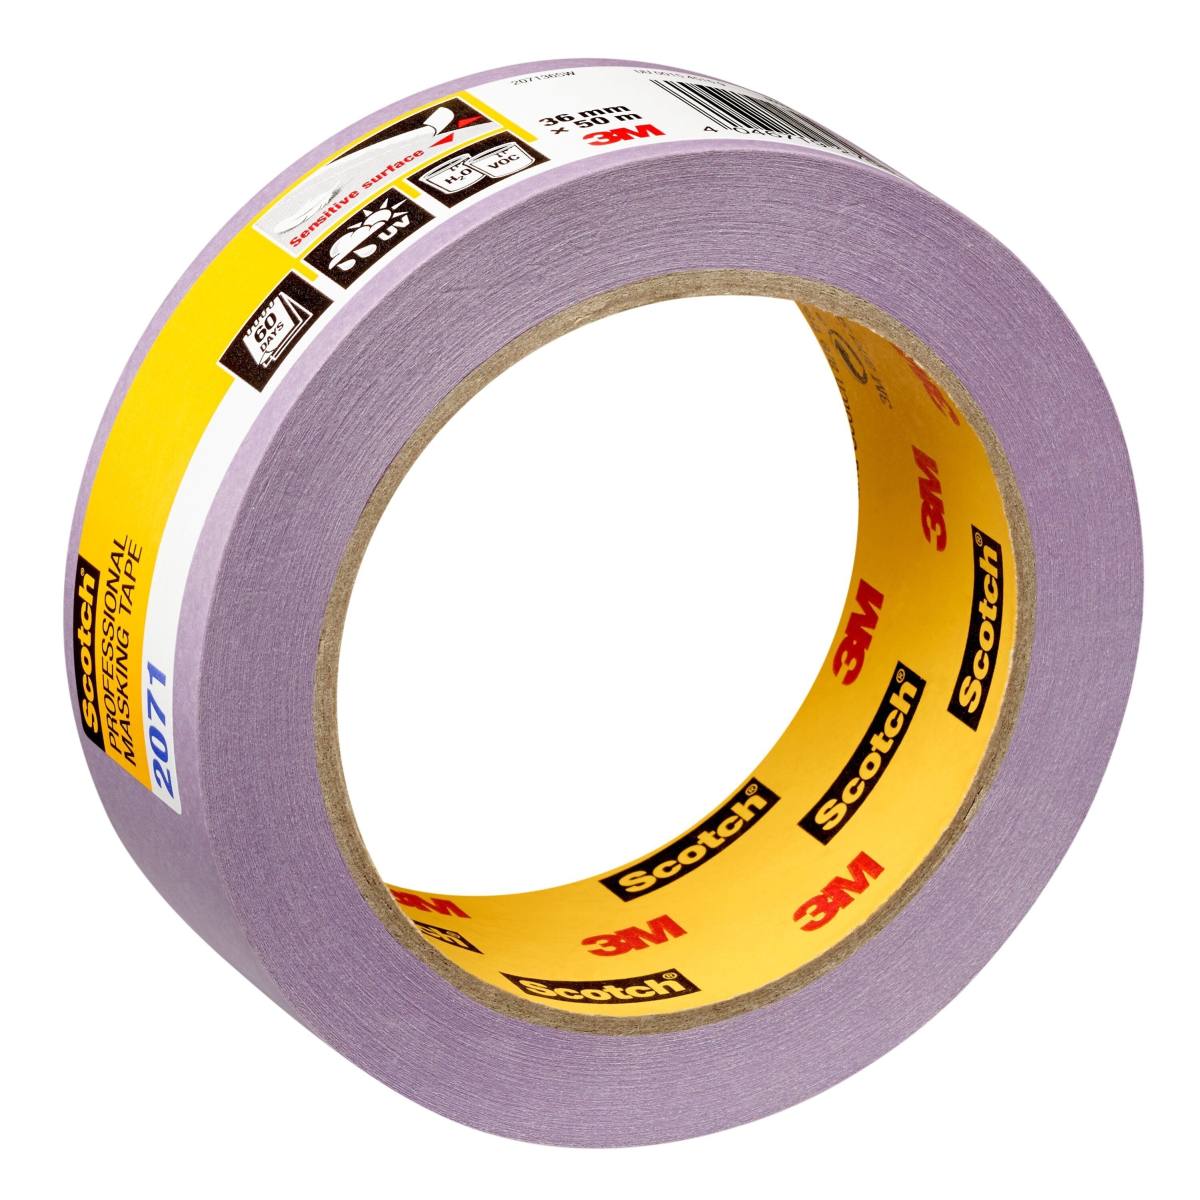 3M crepe tape 2071, purple, 36 mm x 50m